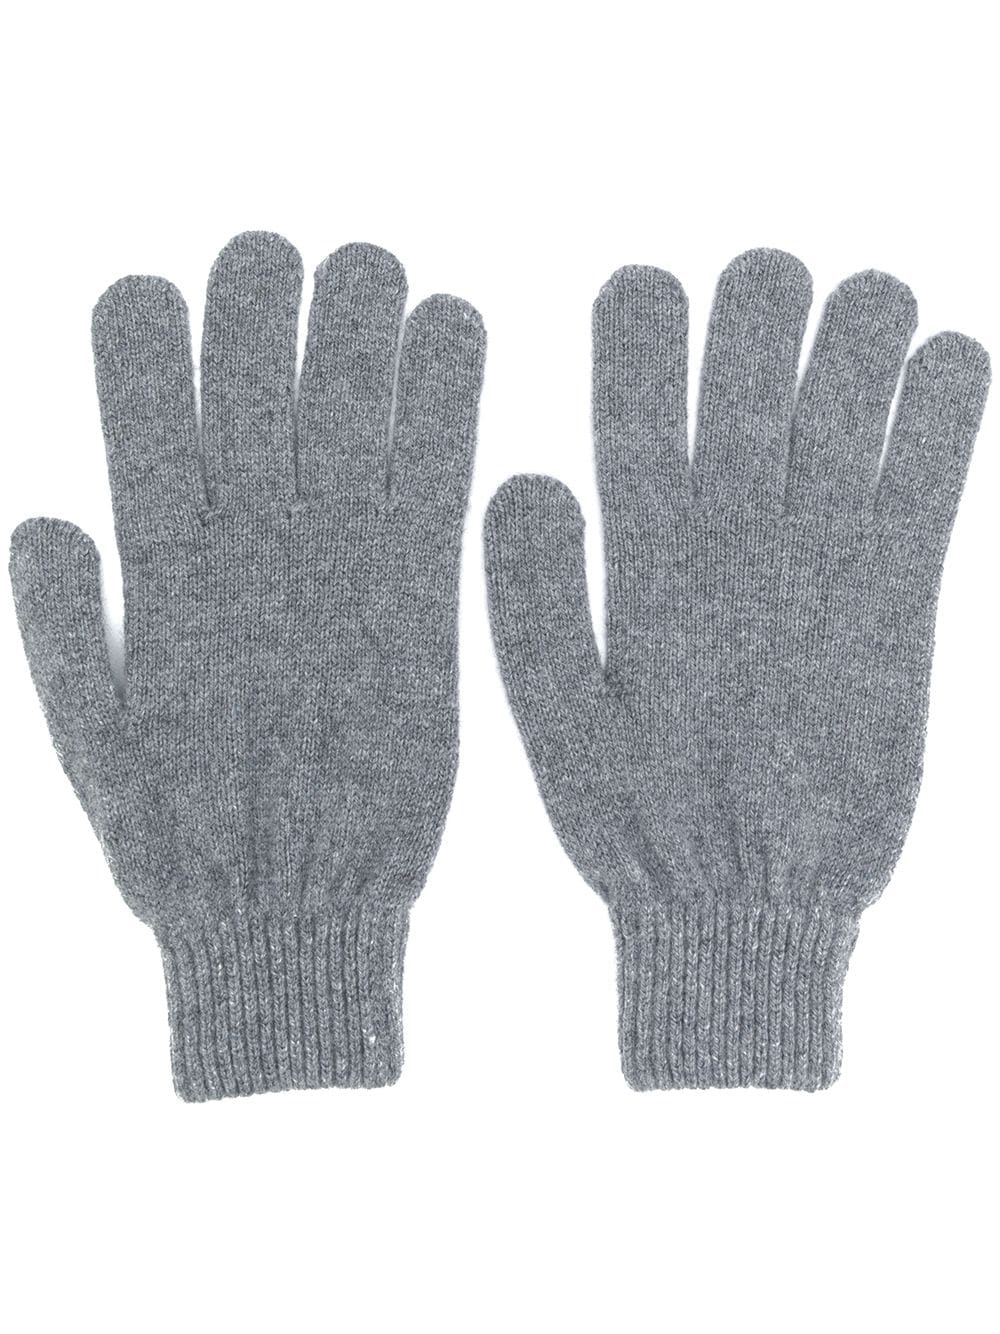 Paul Smith Gloves Grey